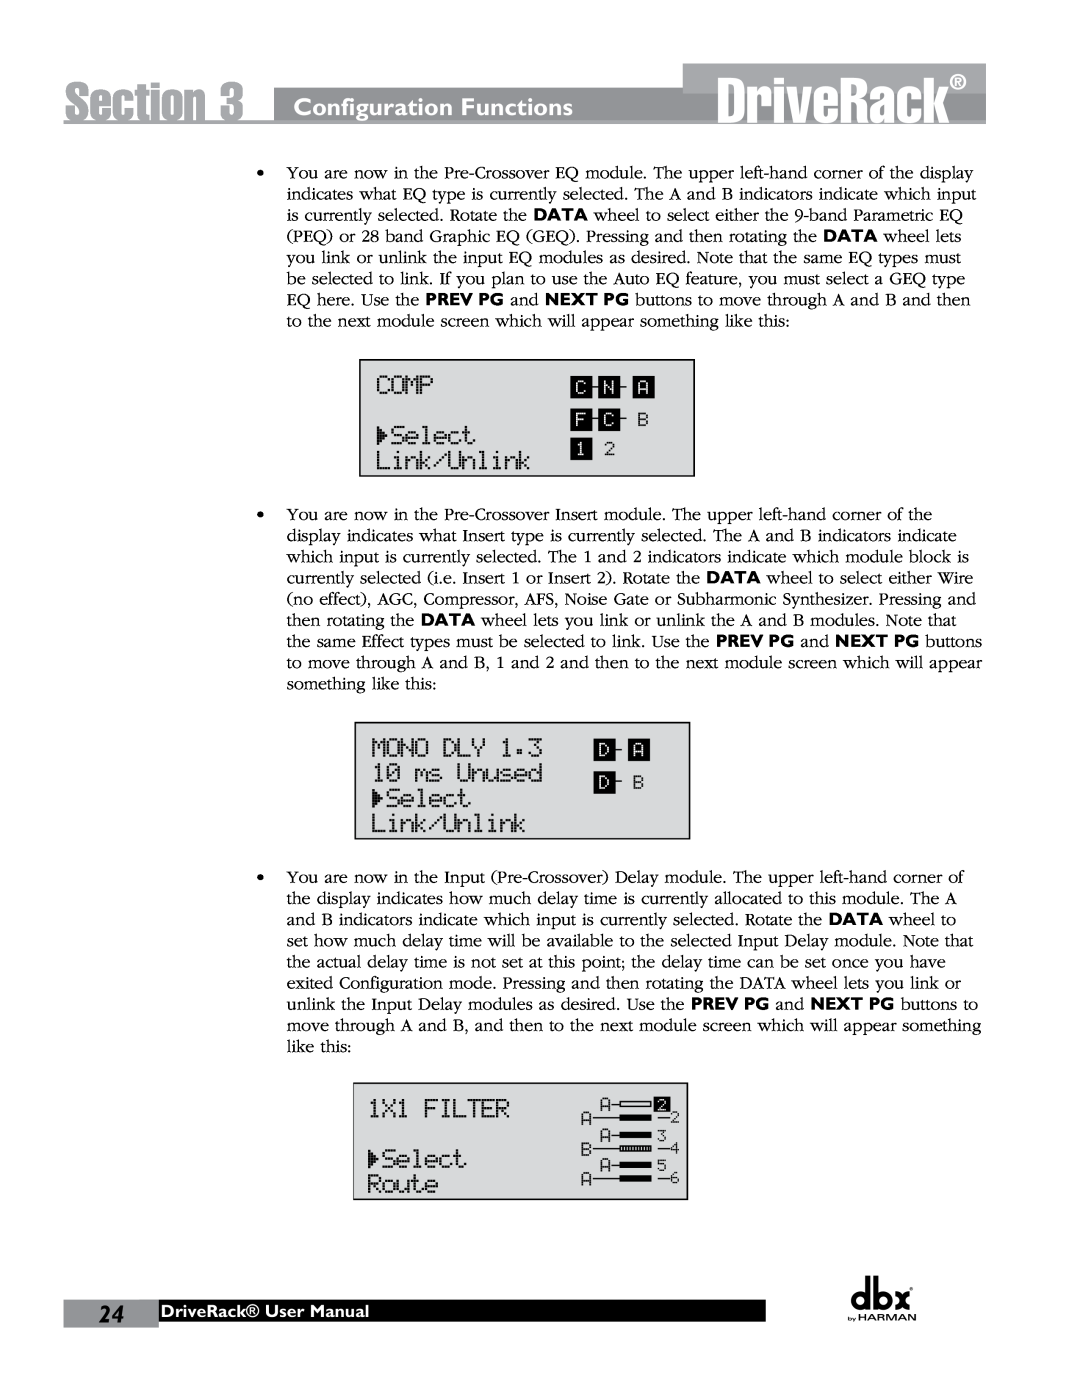 JBL 260 user manual DriveRack, Section, Configuration Functions, A A2, Cna Fcb, Da Db 